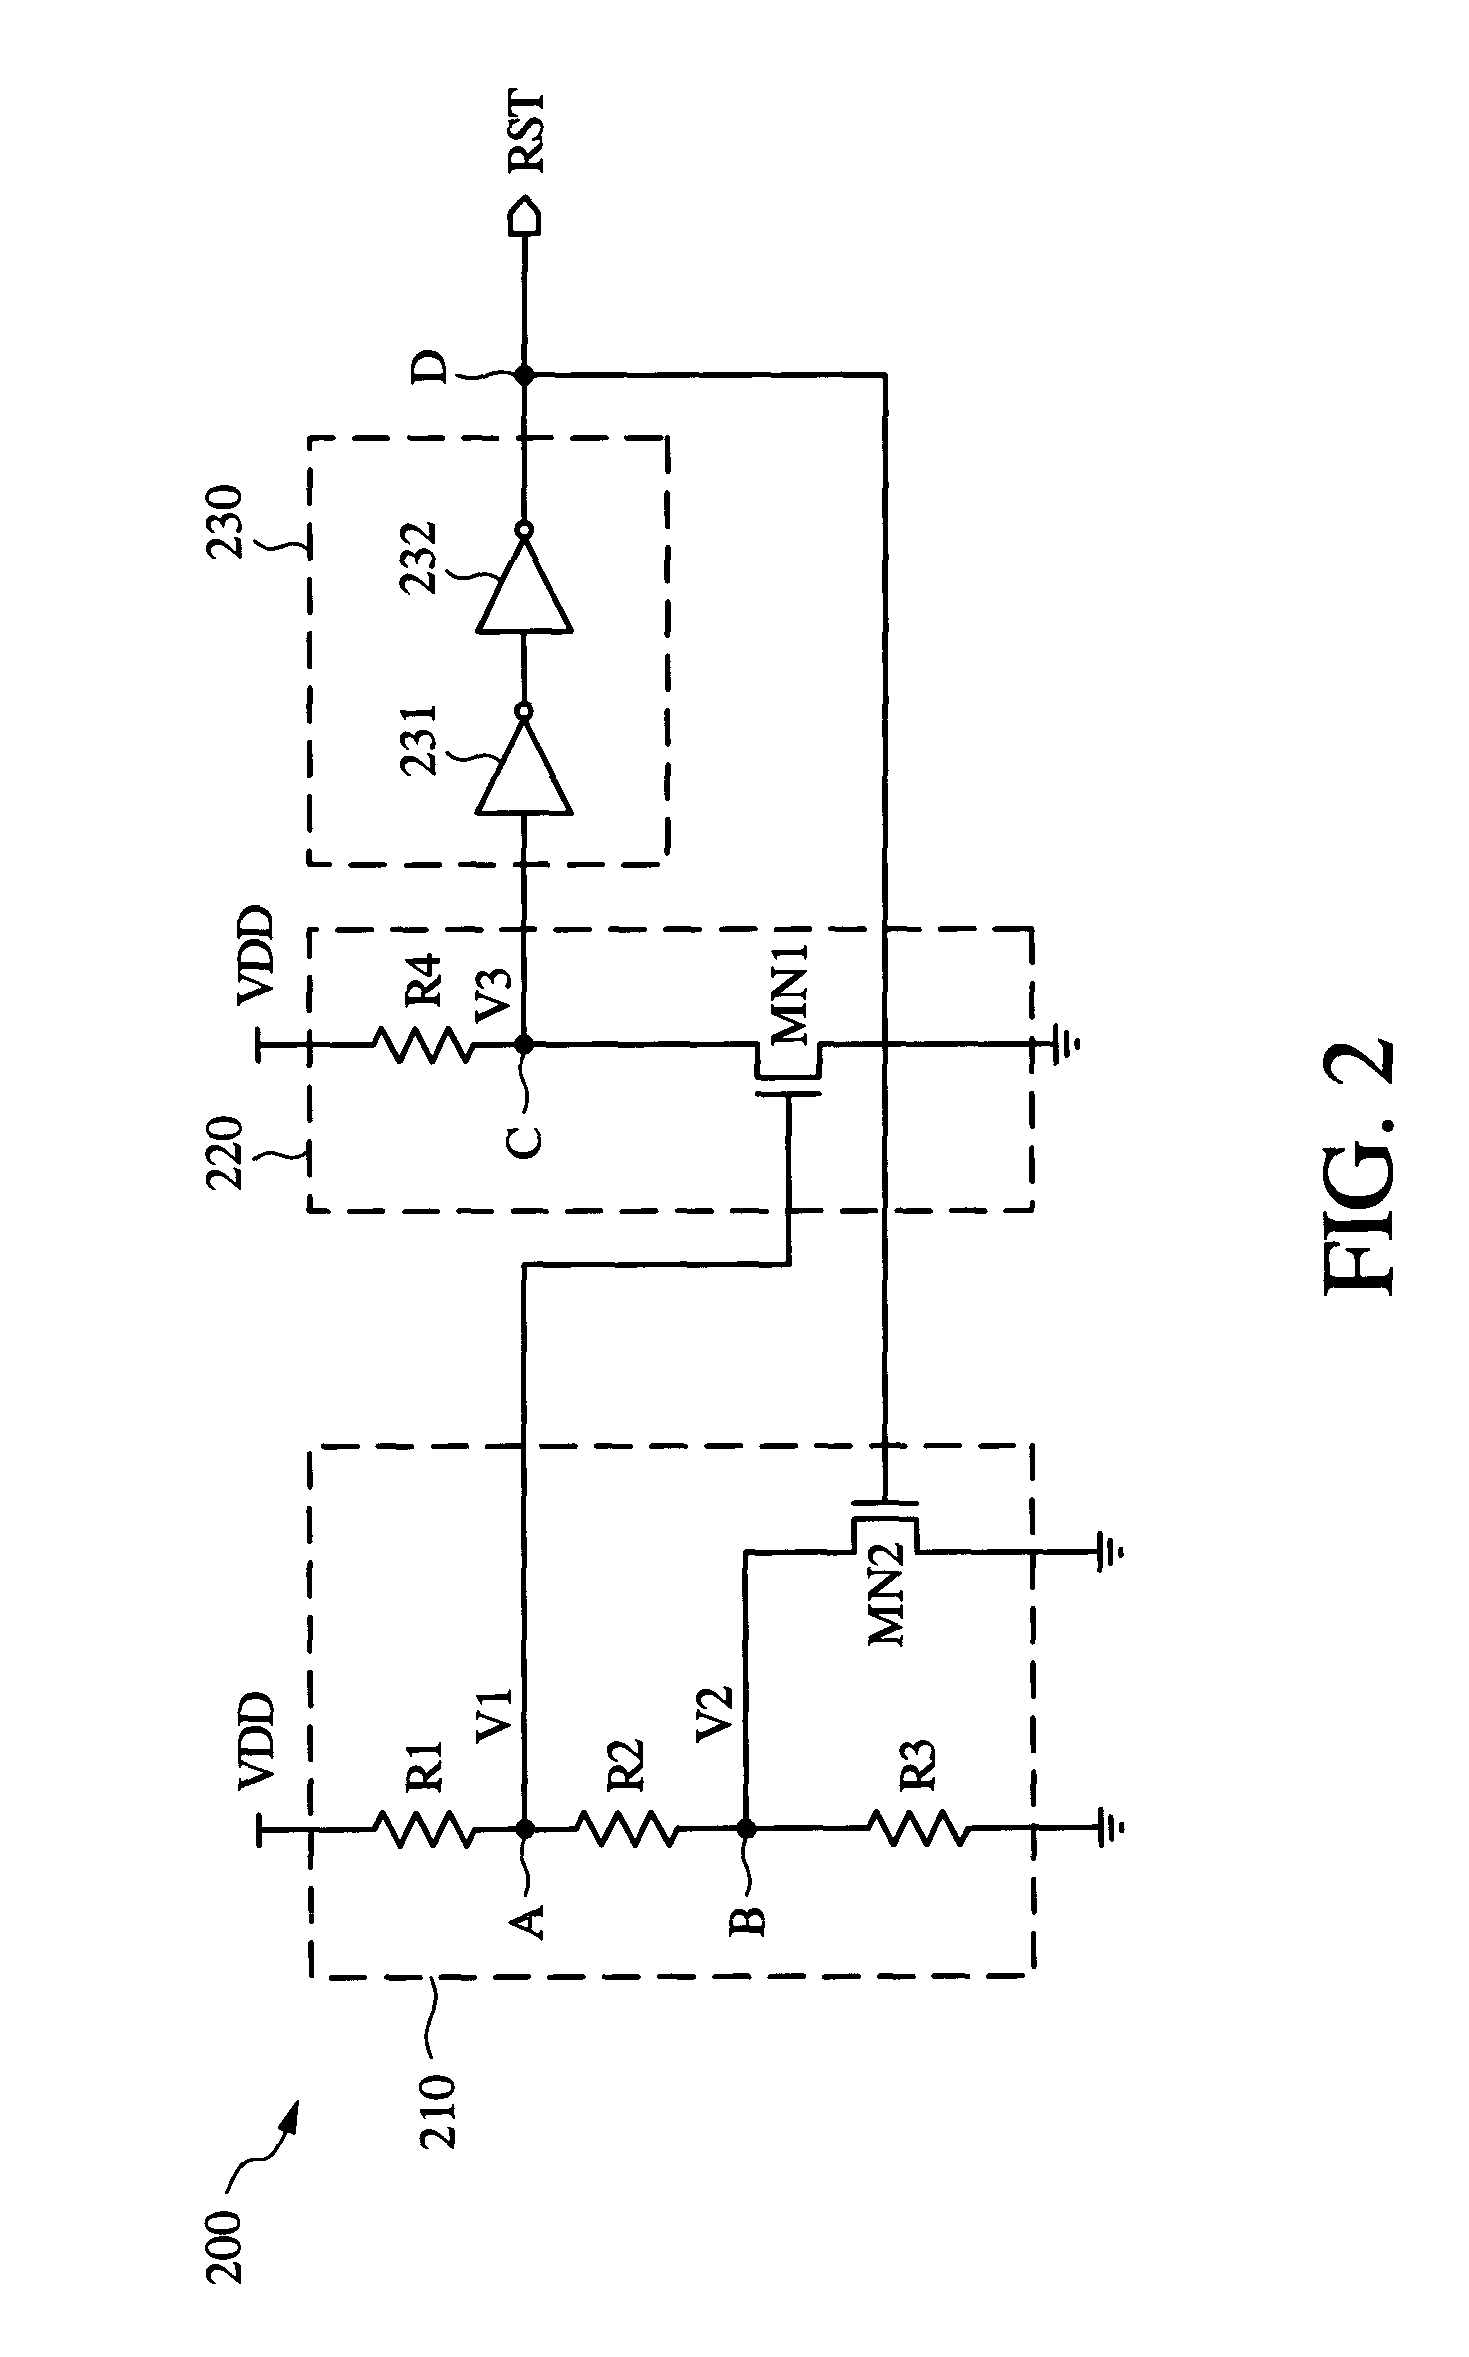 CMOS power on reset circuit